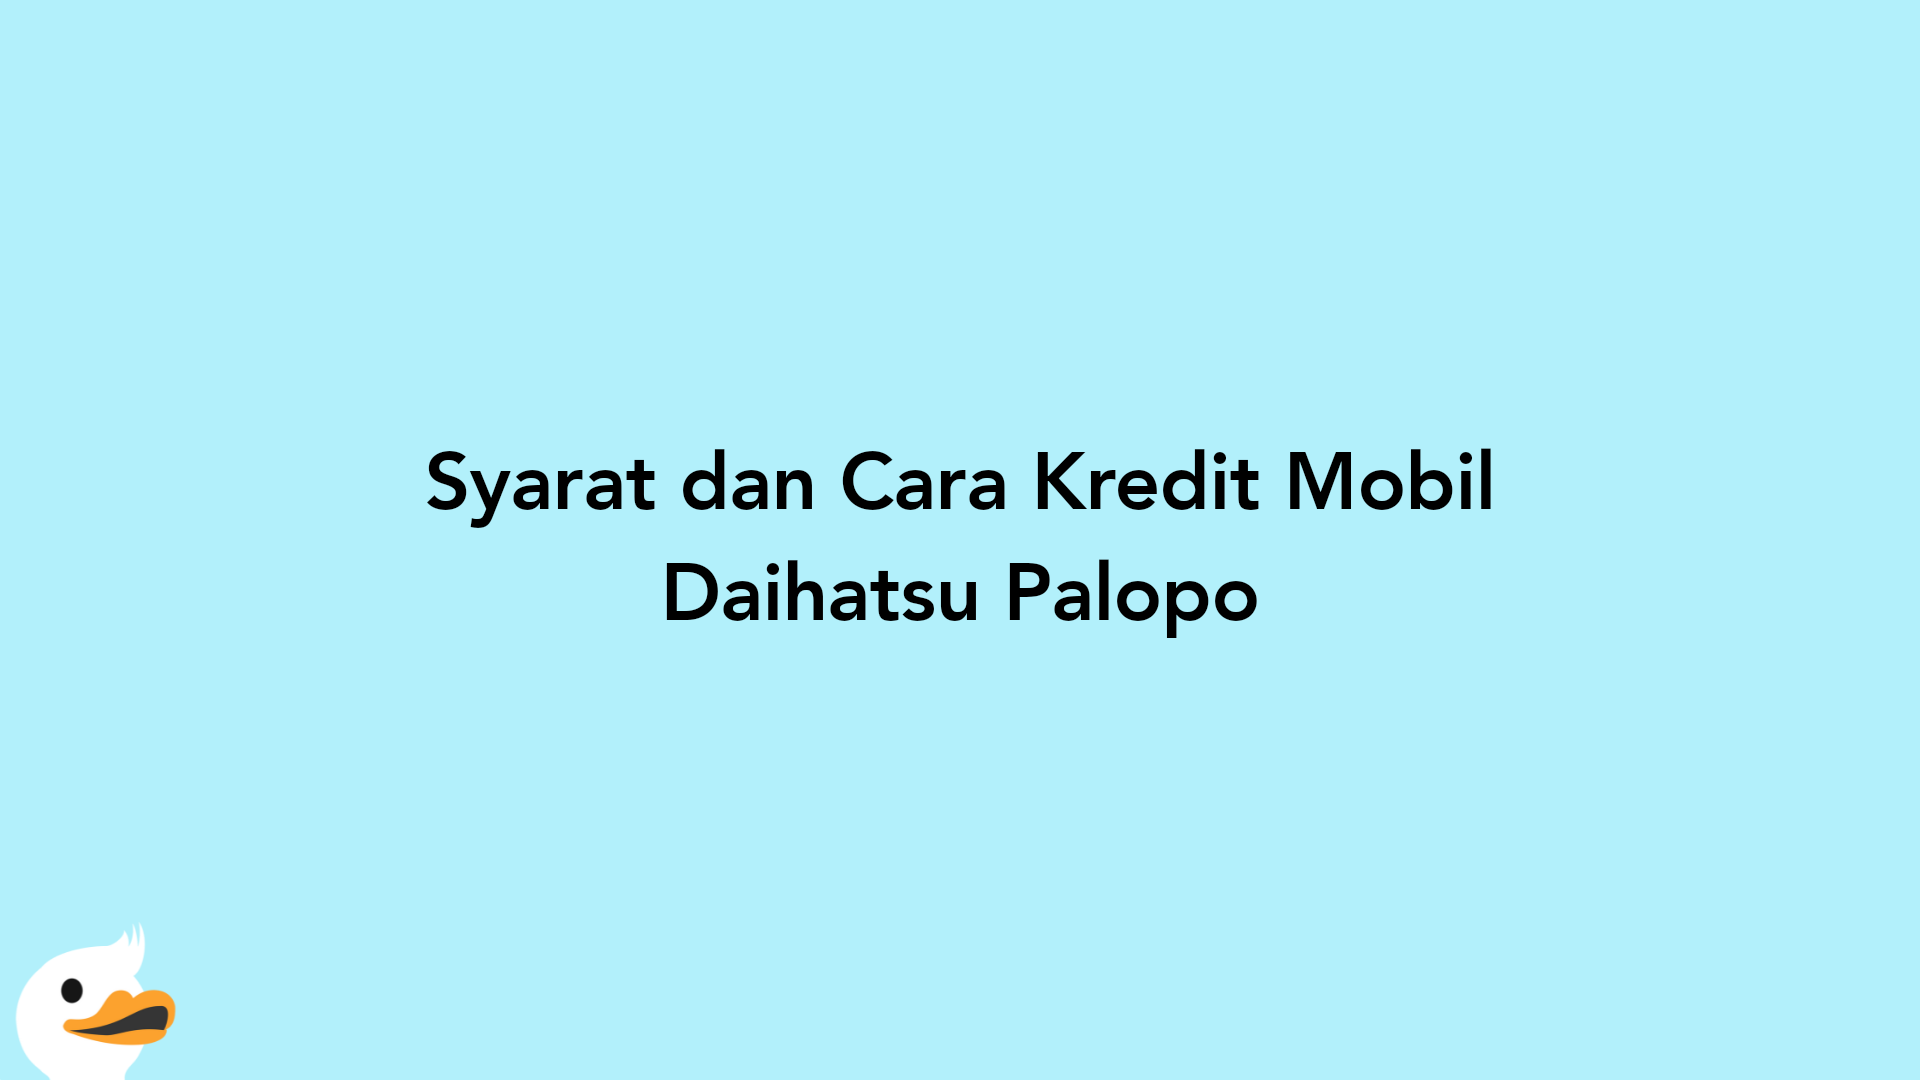 Syarat dan Cara Kredit Mobil Daihatsu Palopo